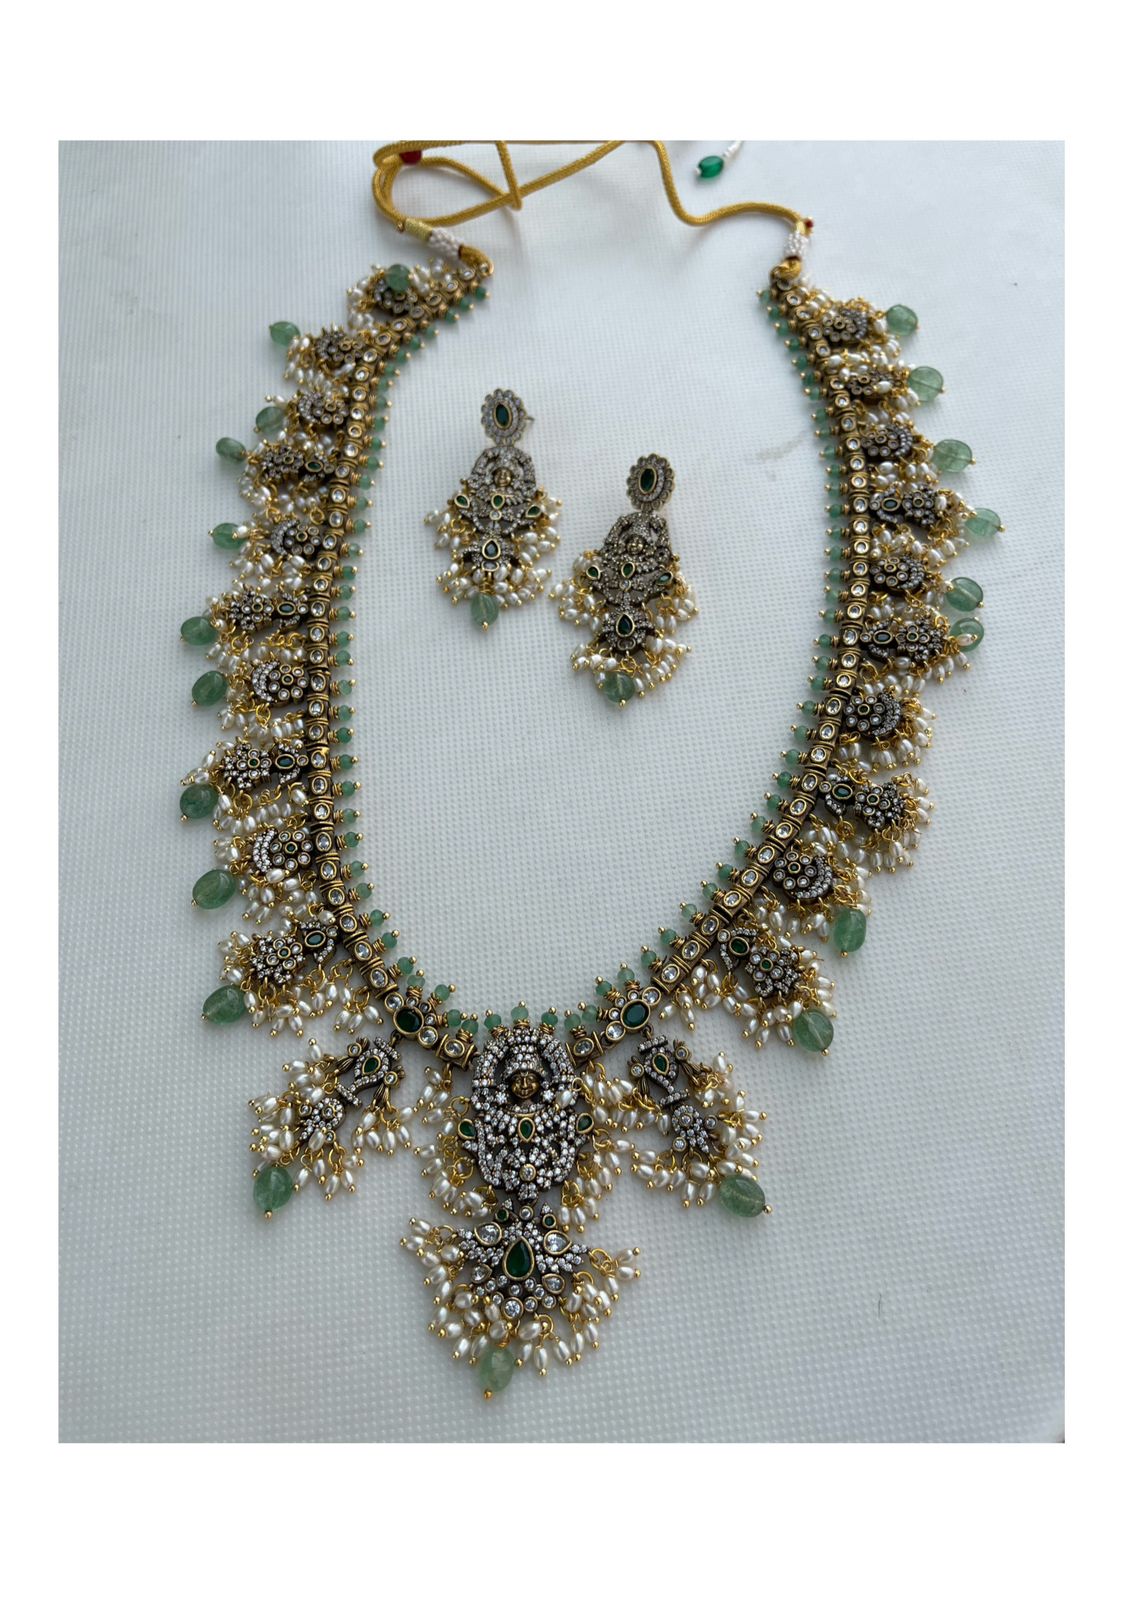 Lord balaji long victorian guttapusalu necklace ( lord venkateshwar sw ...